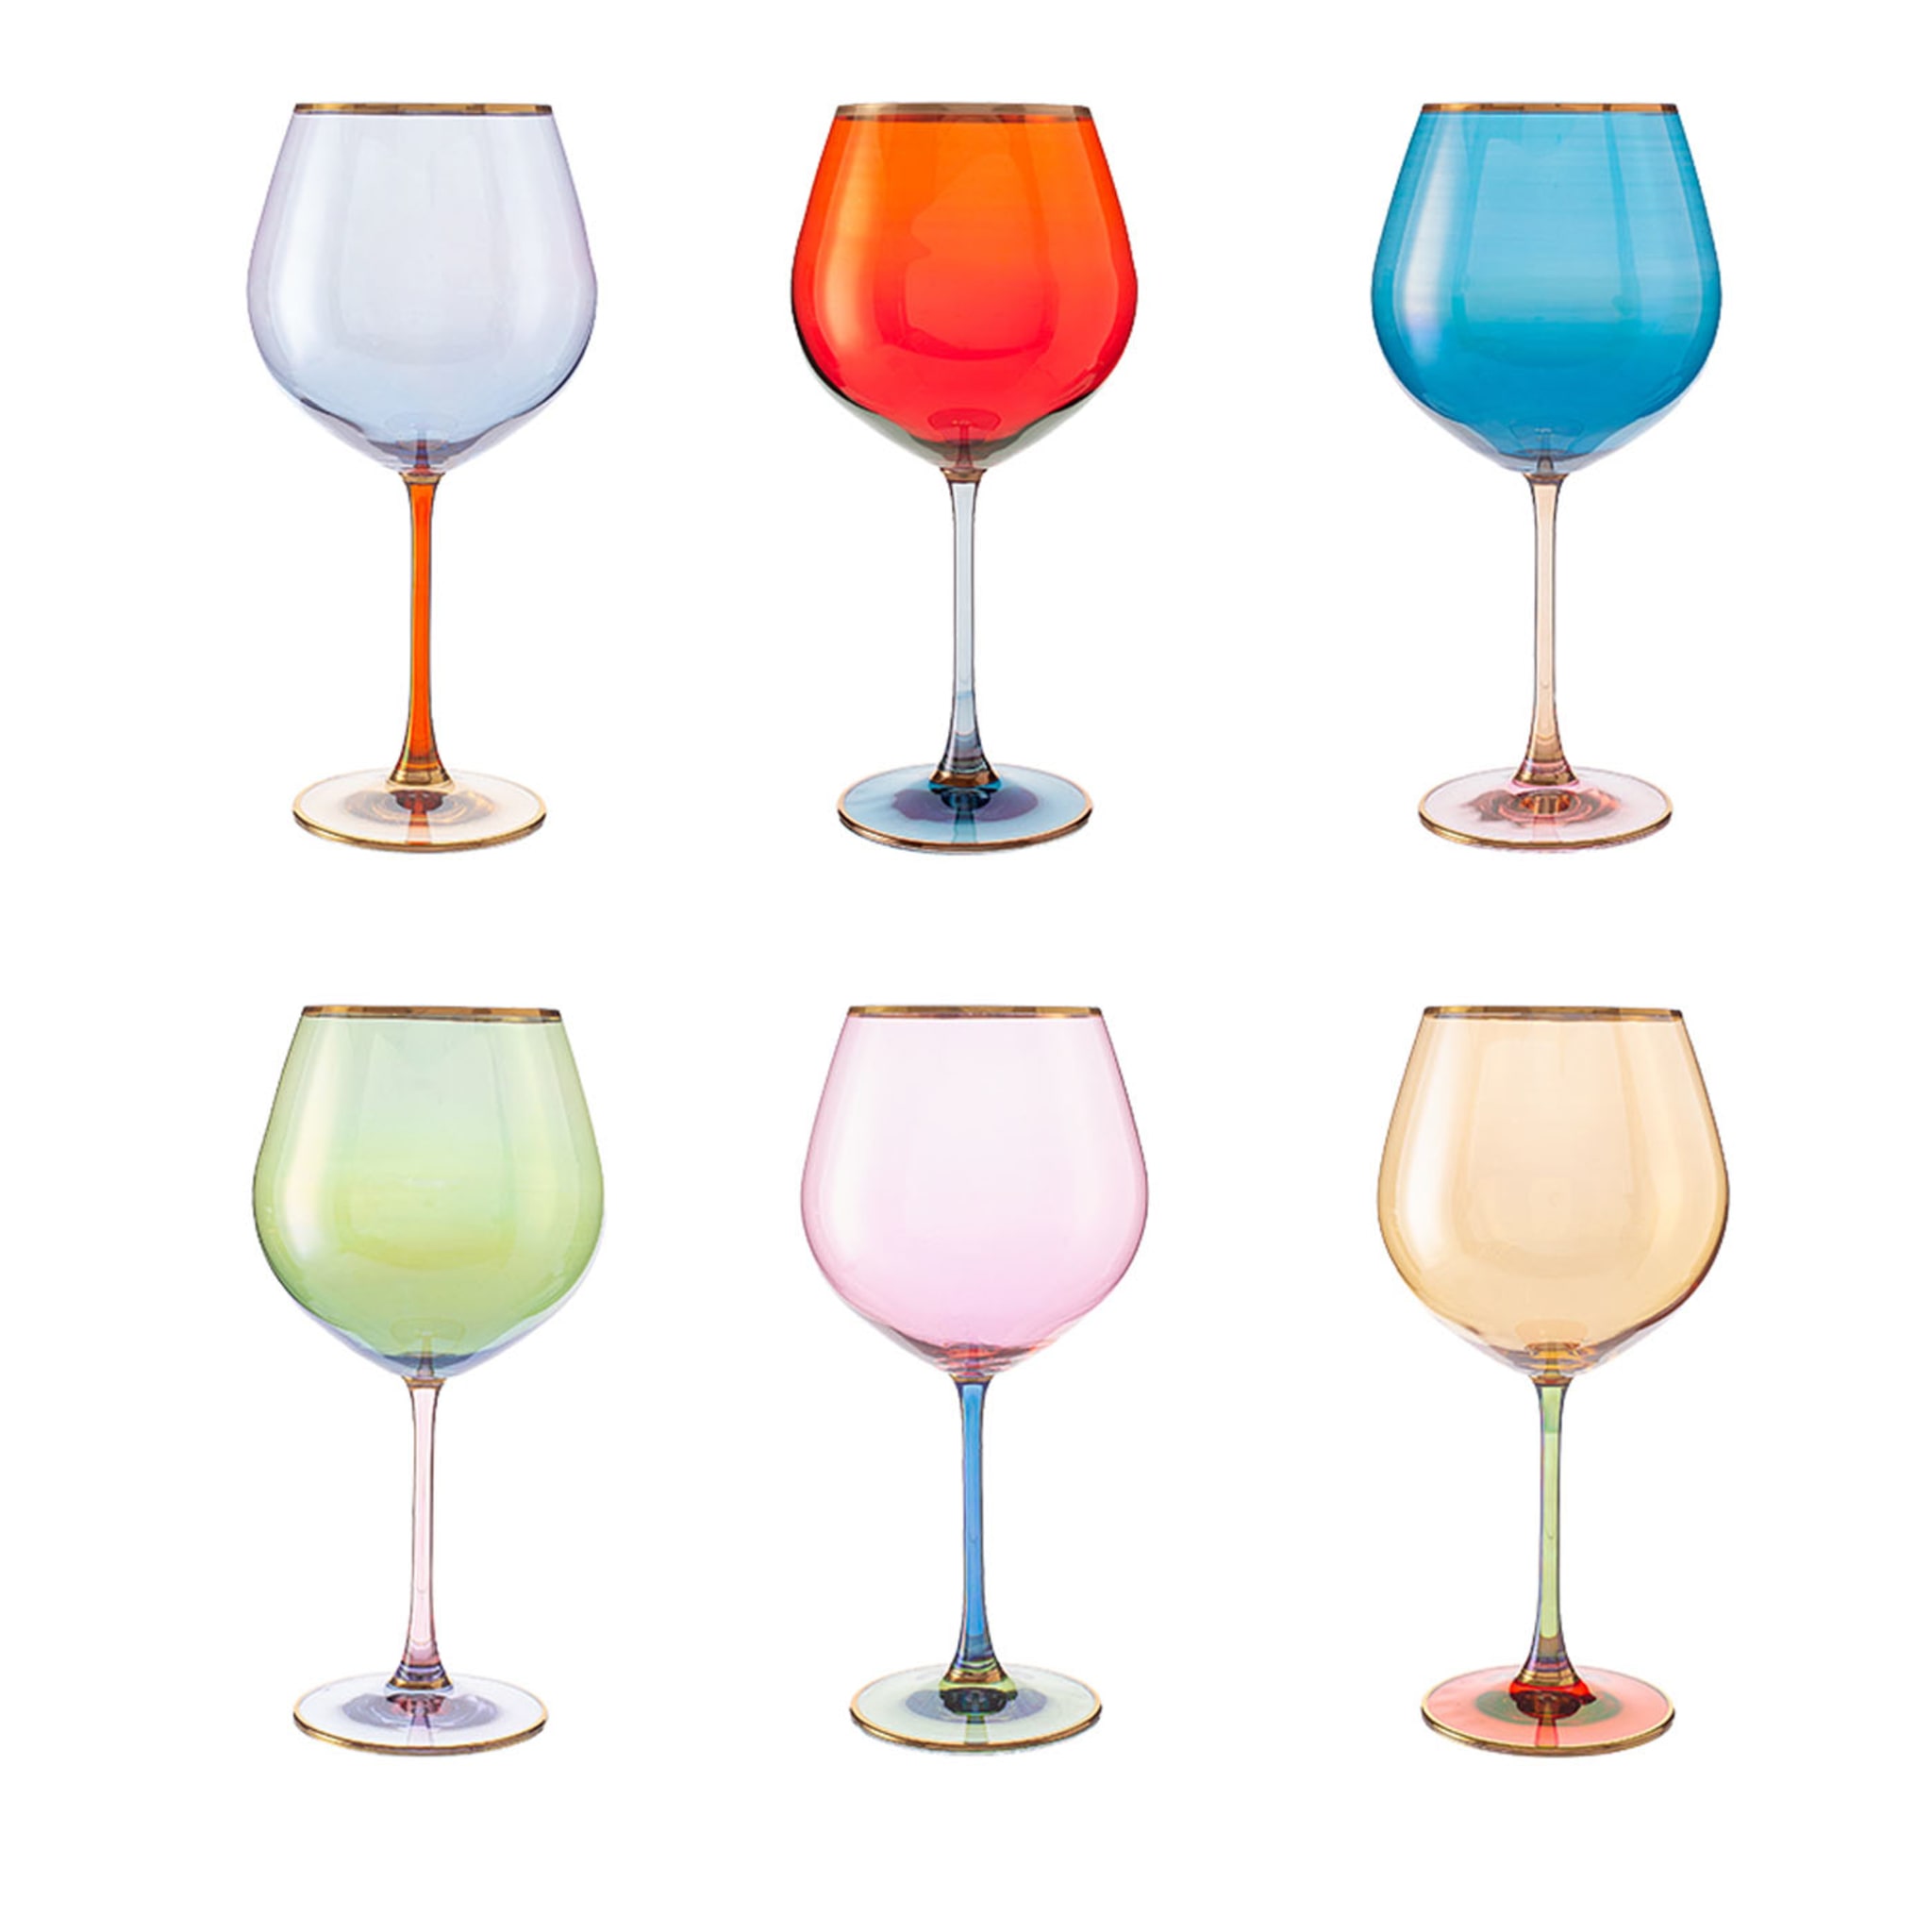 Polychrome Set of 6 Wine Tasting Glasses - Main view